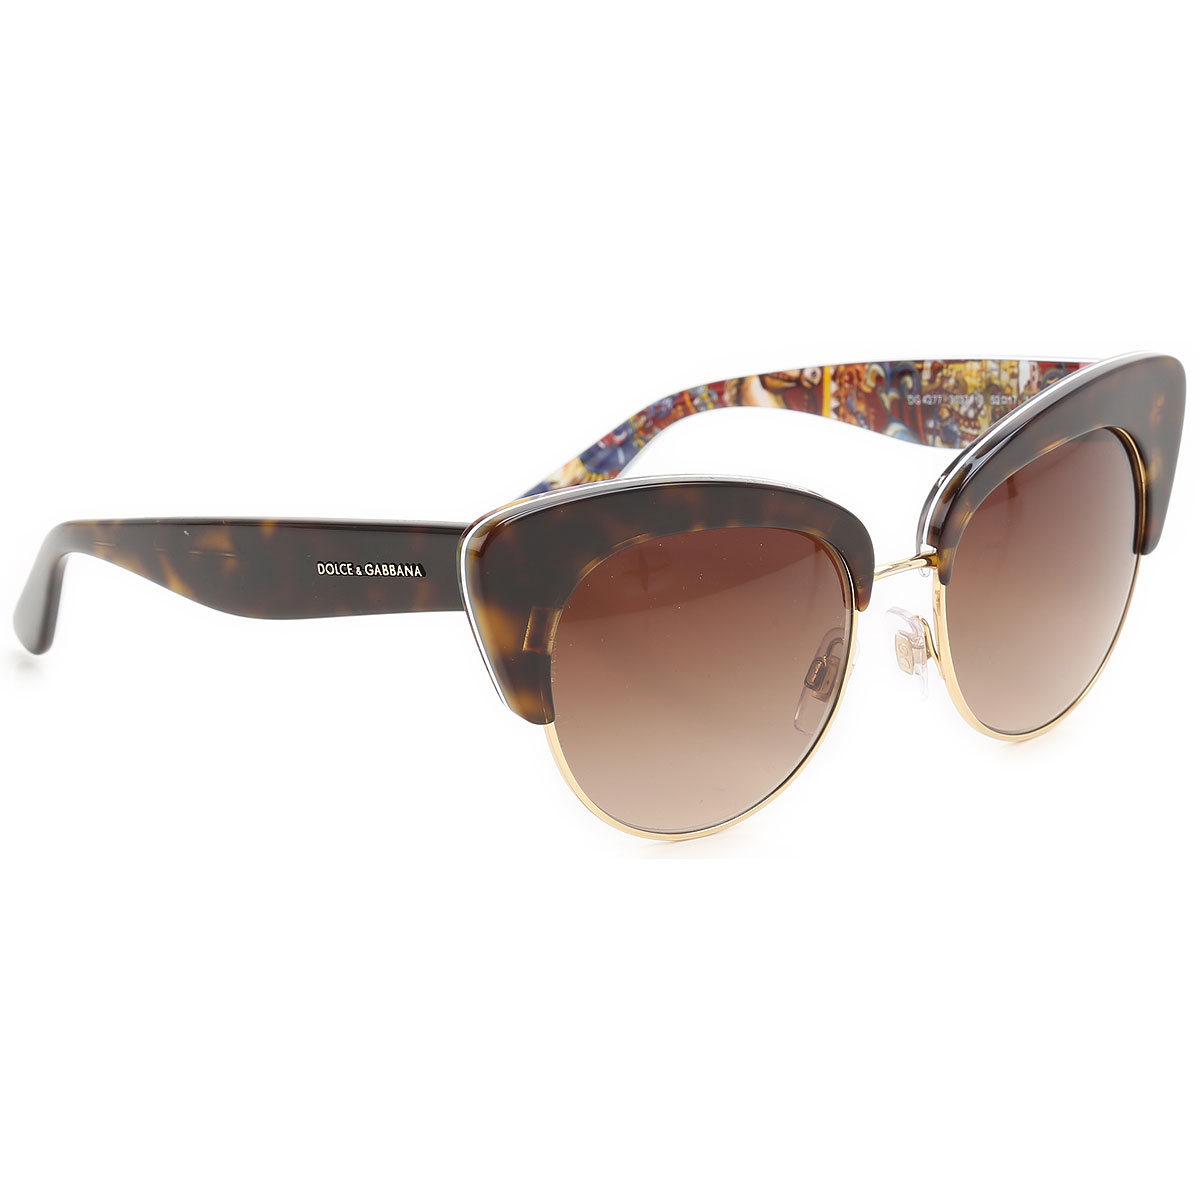 Sunglasses Dolce & Gabbana, Style code dg4277303713